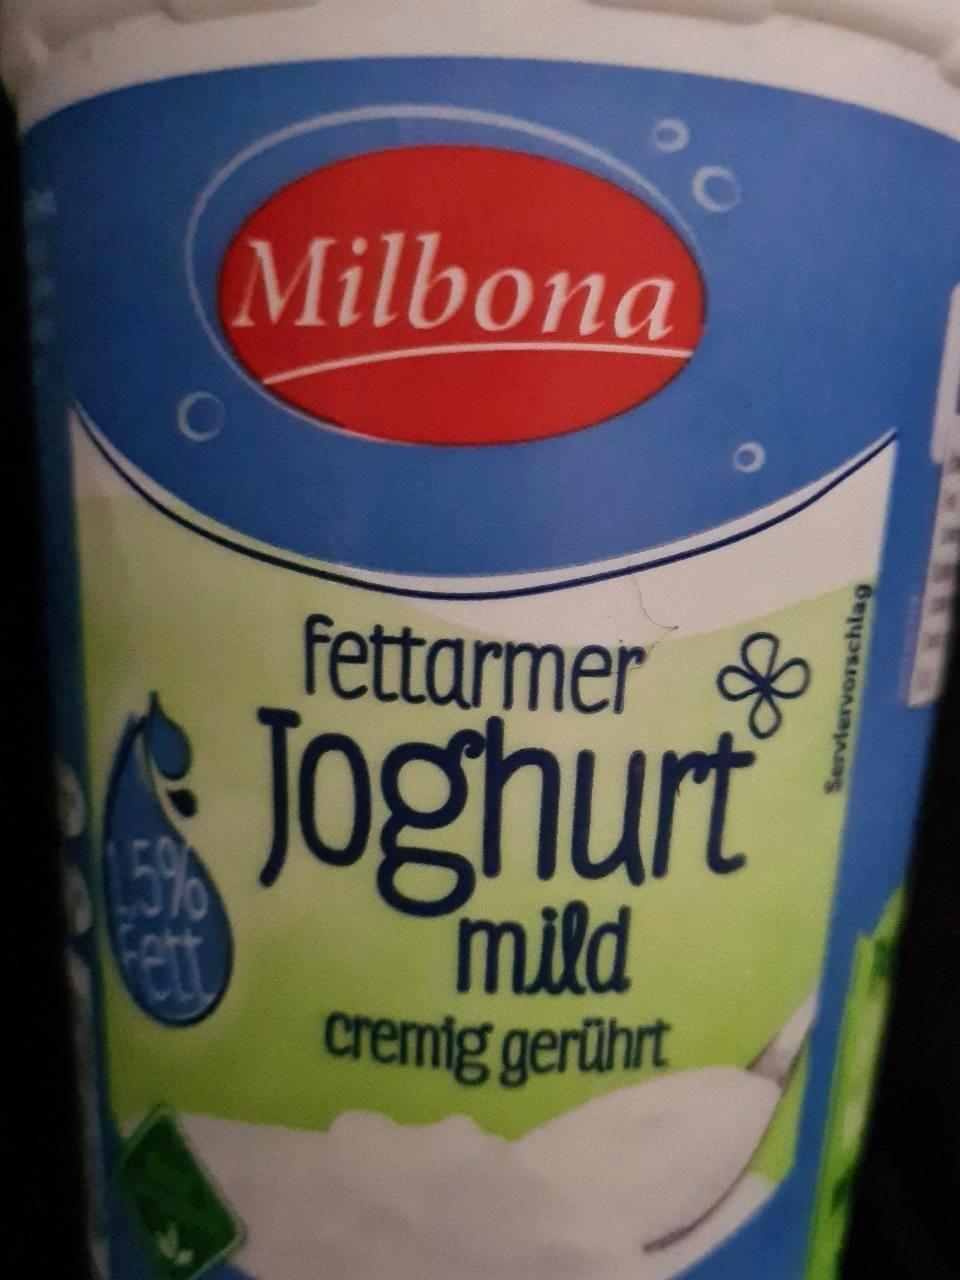 Képek - Fettarmer joghurt mild 1,5 % Milbona